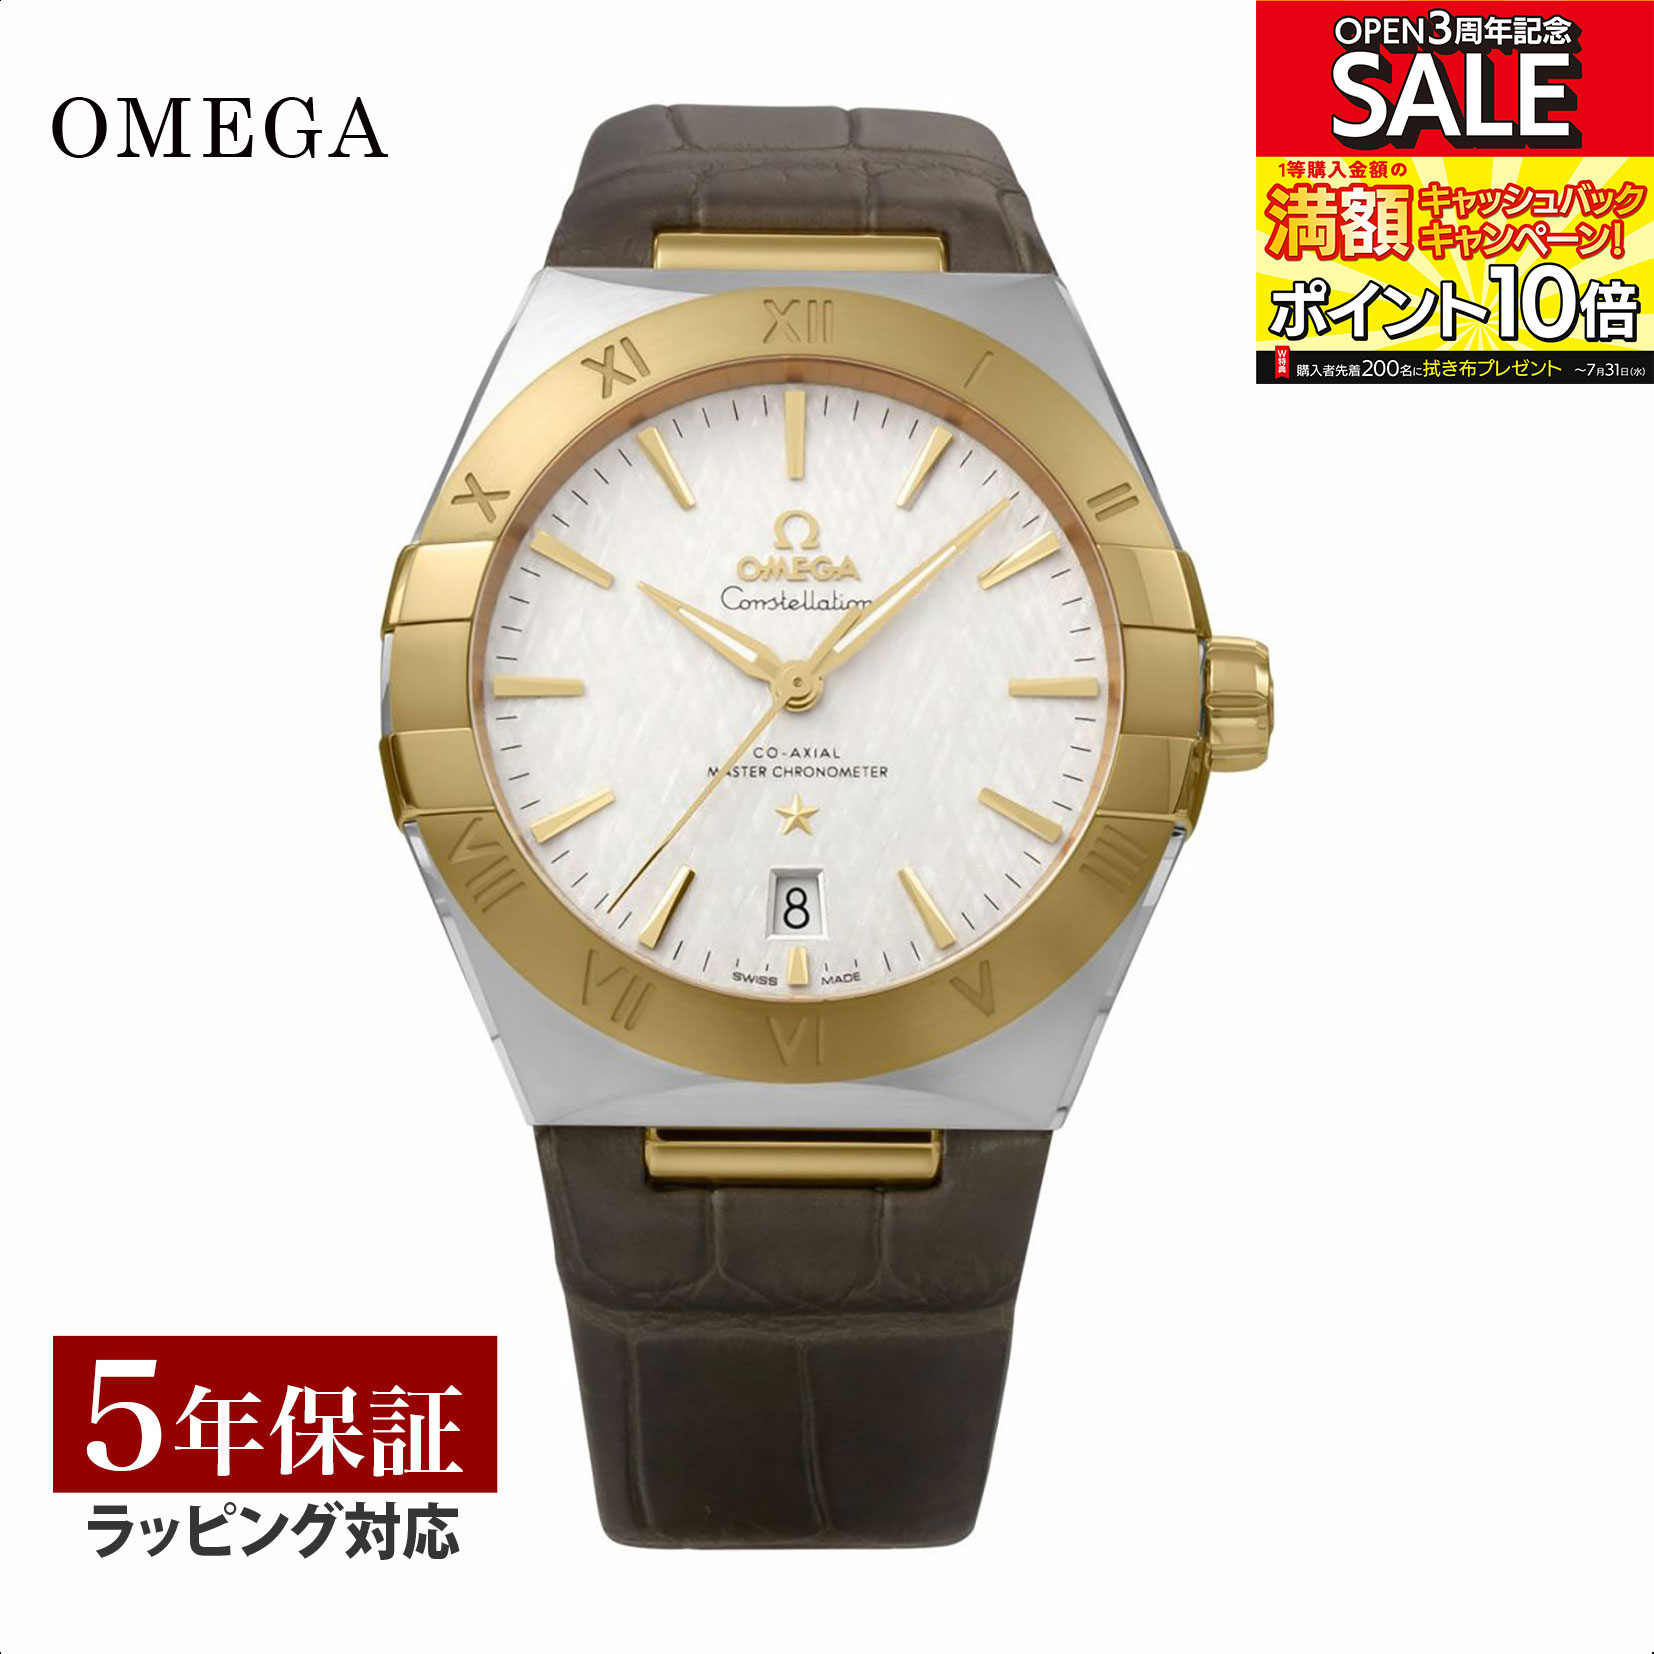 OMEGA オメガ コンステレーション 自動巻 メンズ シルバー 131.23.39.20.02.002 時計 腕時計 高級腕時計 ブランド